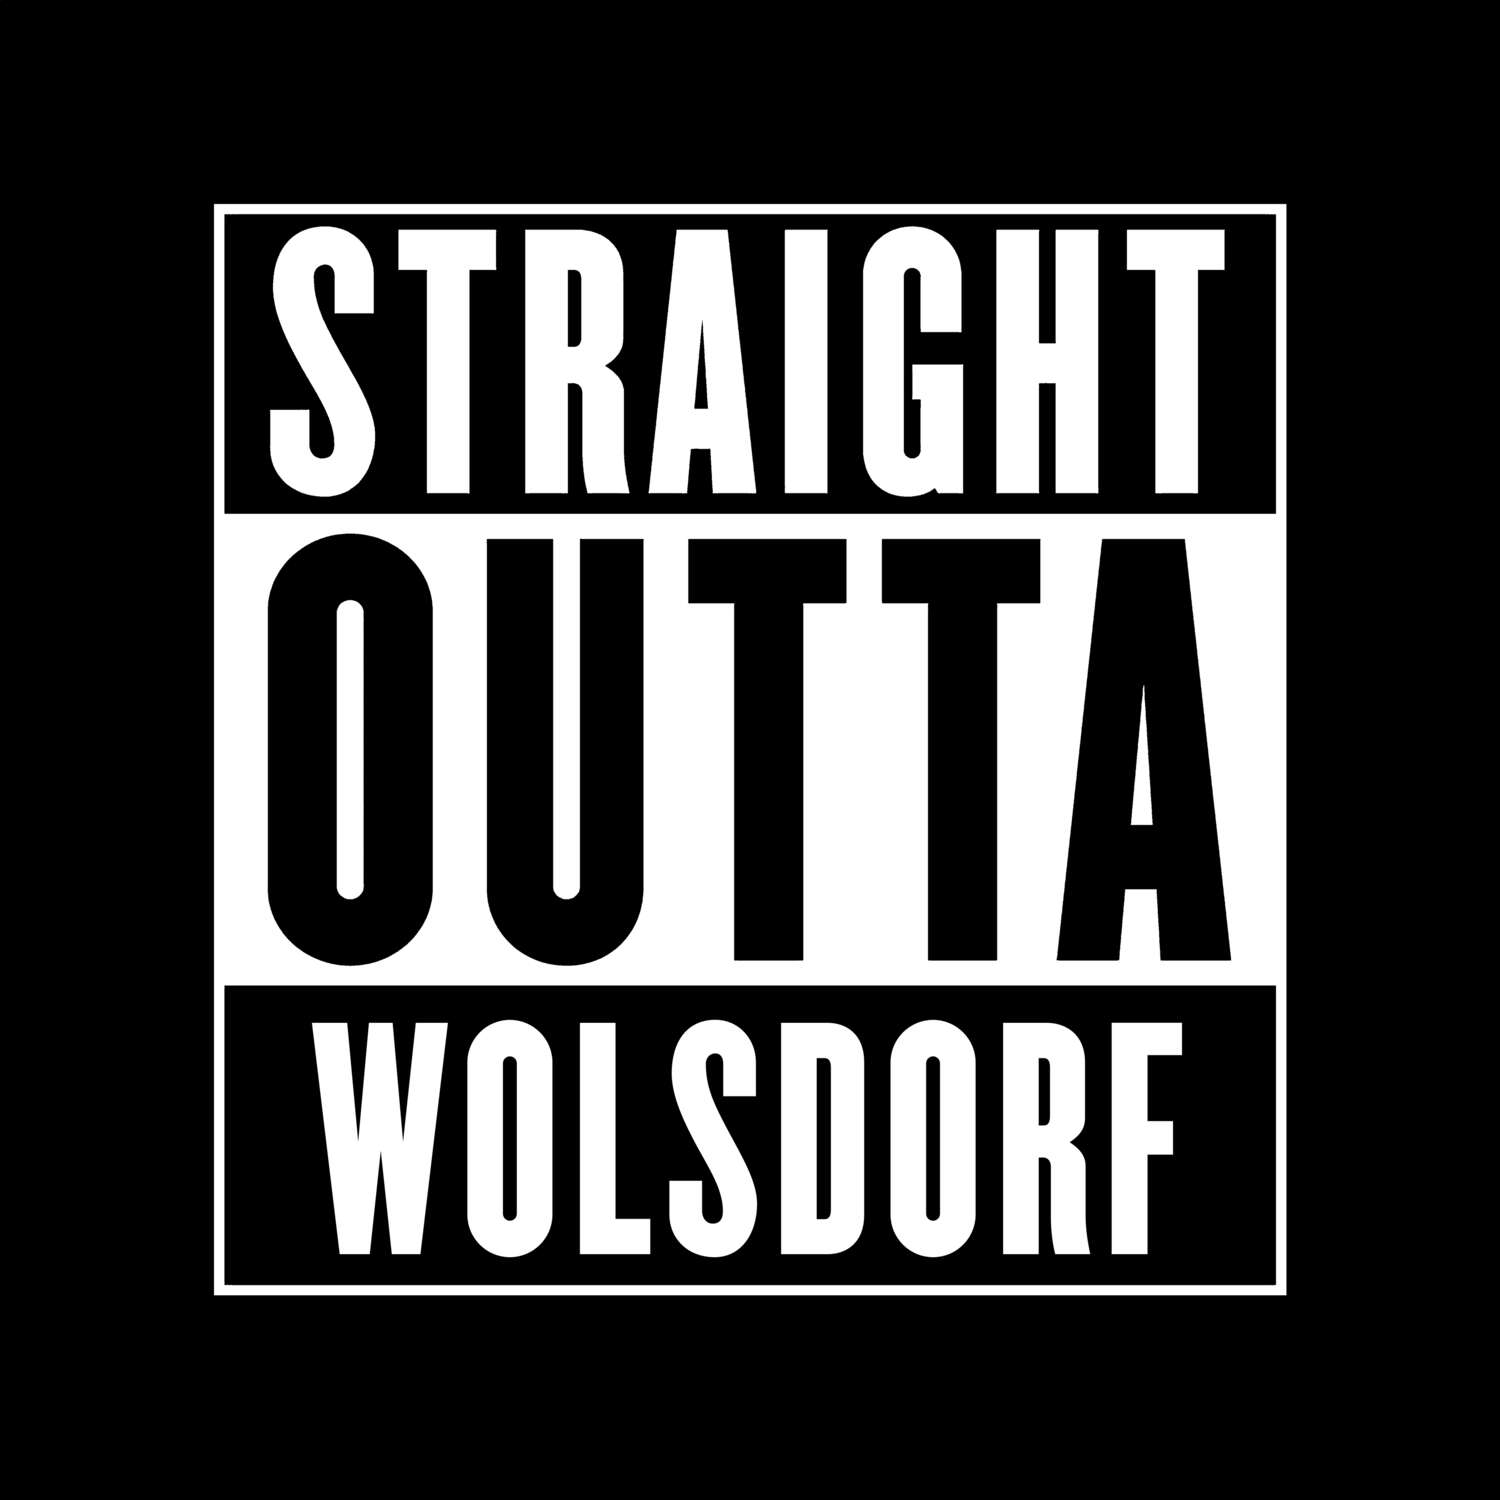 Wolsdorf T-Shirt »Straight Outta«